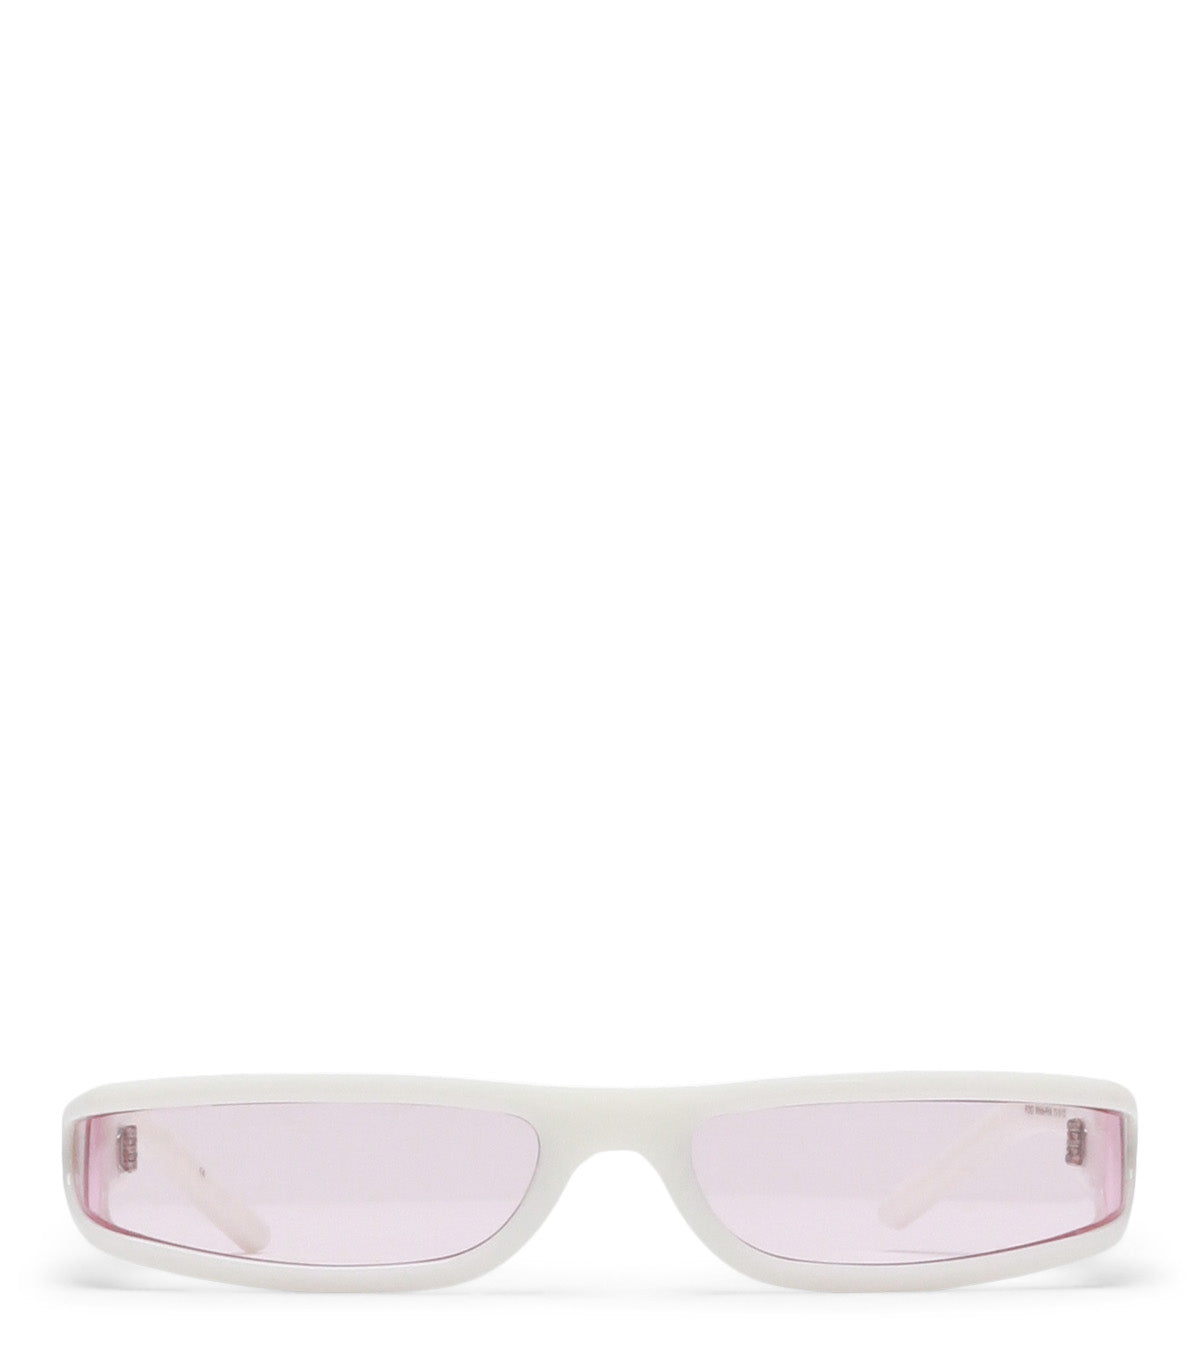 Rick Owens DRKSHDW Sunglasses Fog White Pink